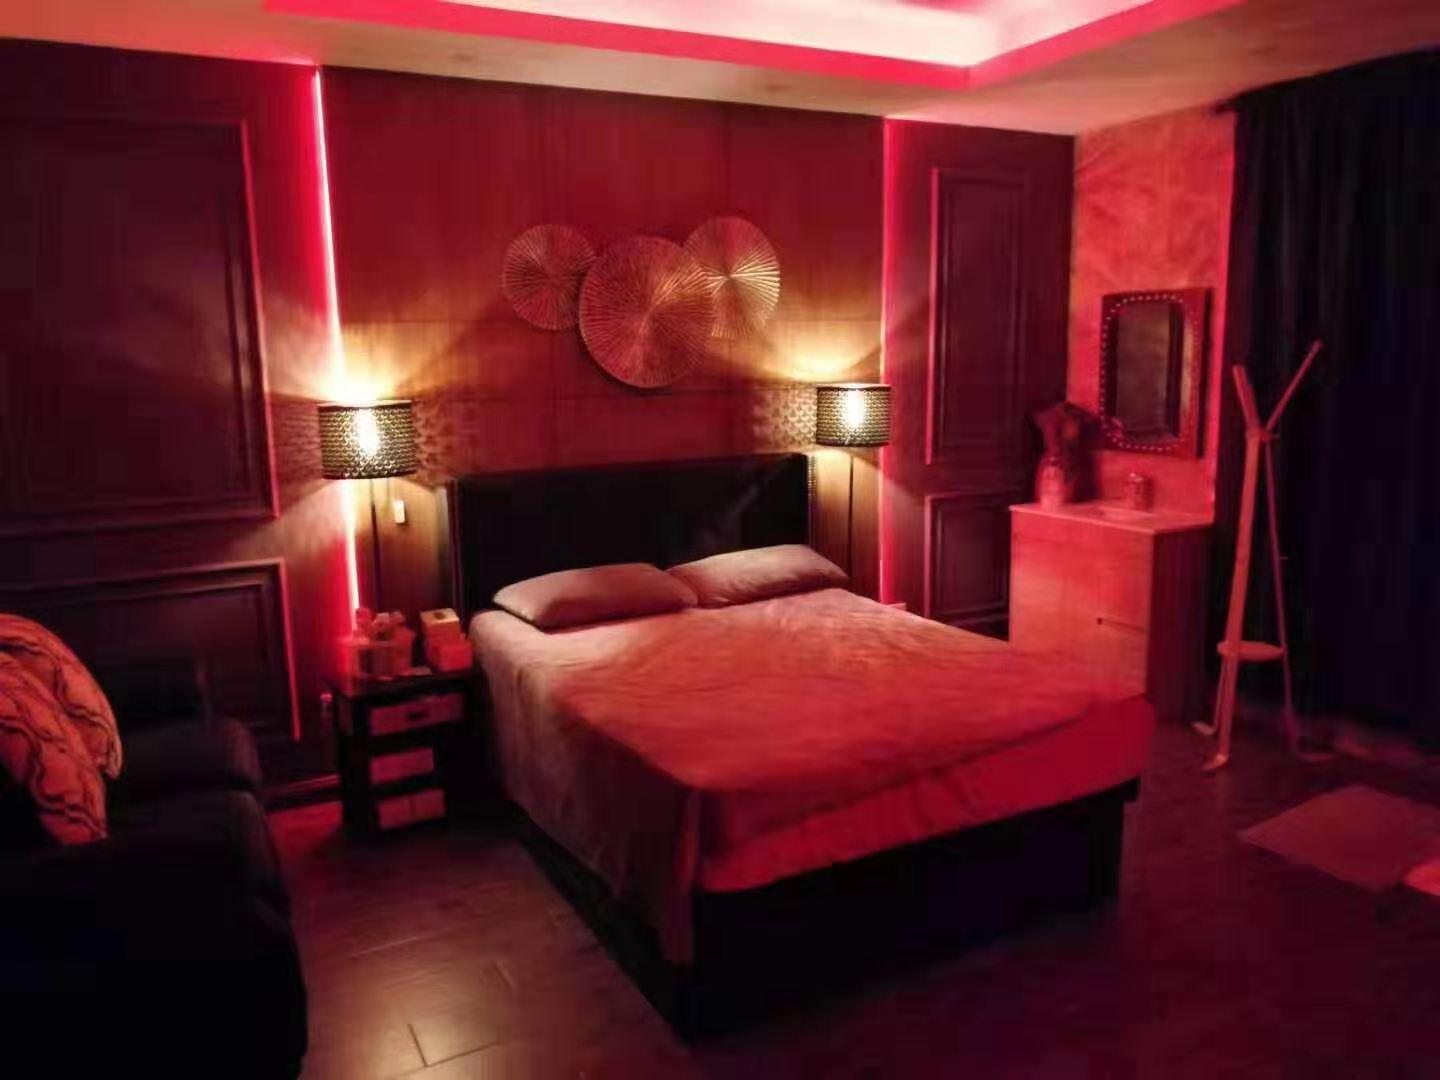 red-lantern-style-room-rooms/November2019/M918mvqx3fIkPSvTdJ7d.jpg